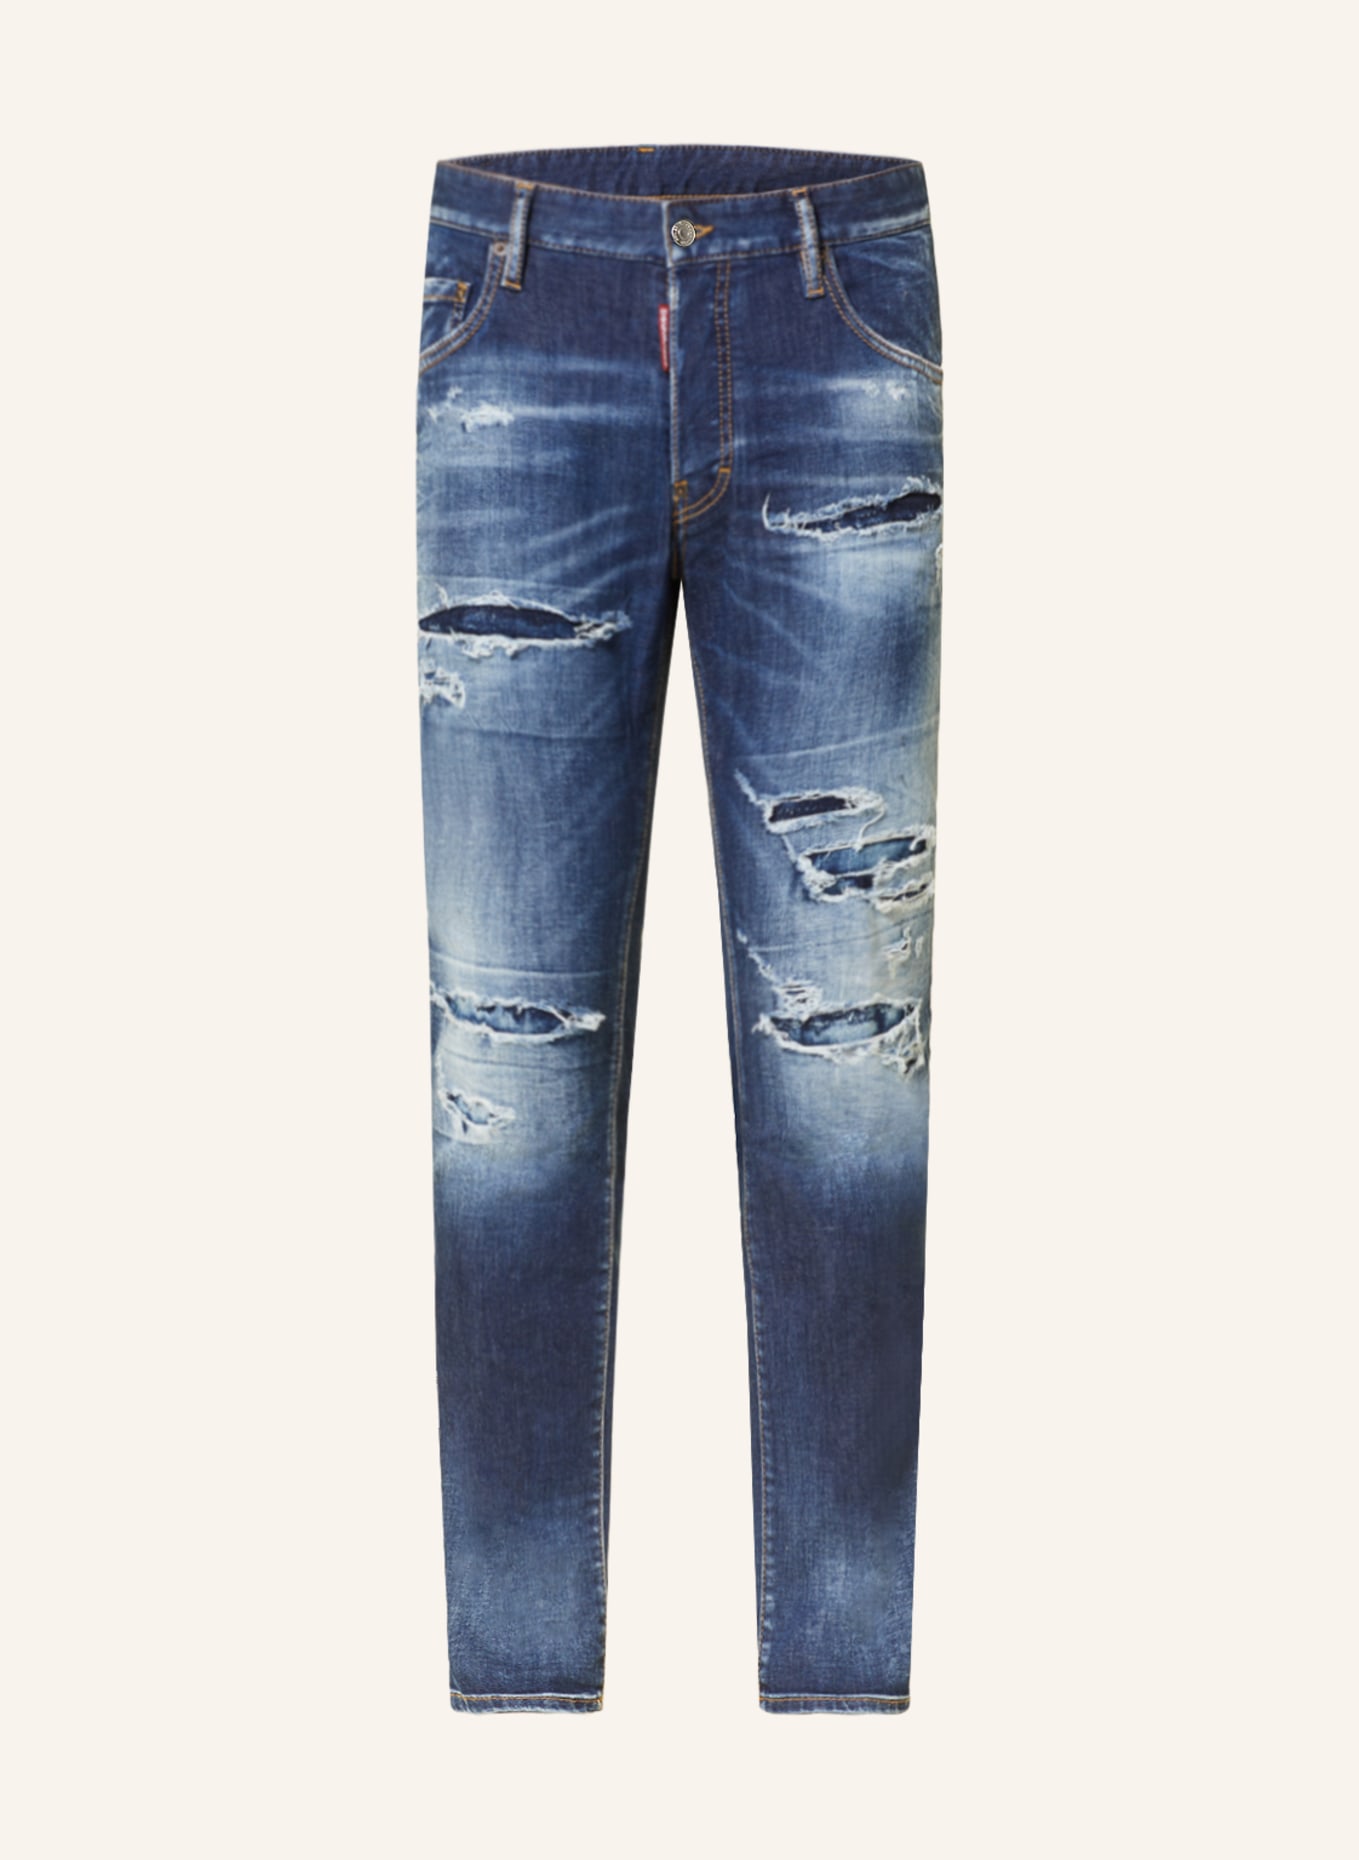 DSQUARED2 Destroyed Jeans SKATER Skinny Fit, Farbe: 470 NAVY BLUE (Bild 1)